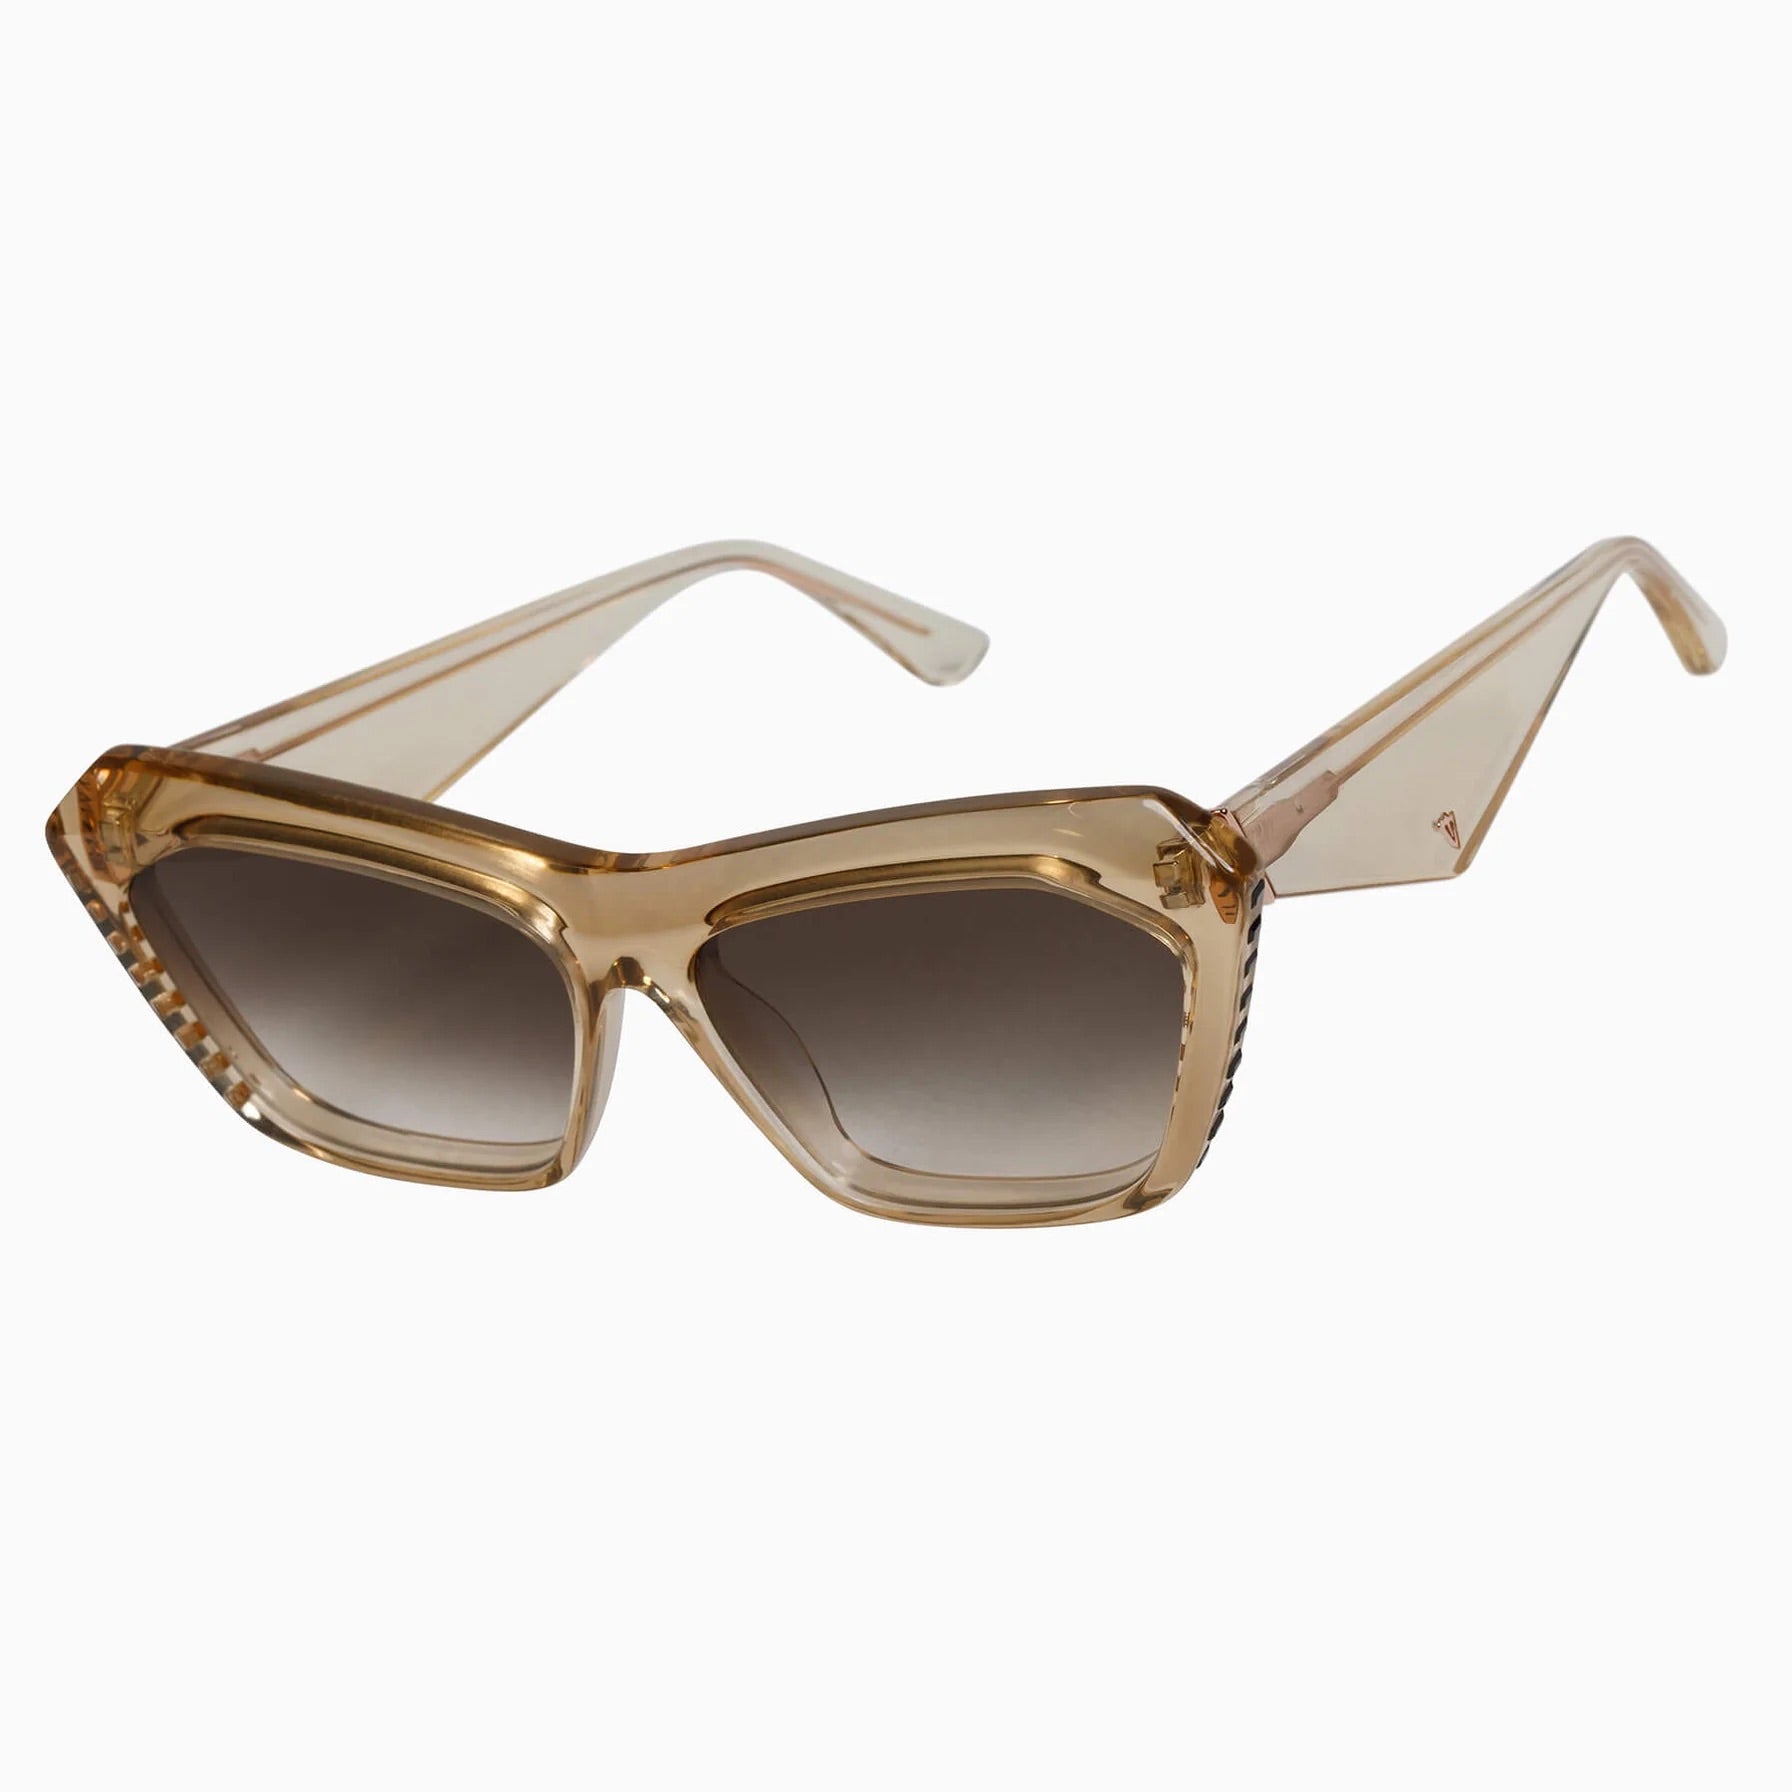 Valley Eyewear | Piaf | Champagne w. Black Swarovski Crystals Gold Metal Trim / Brown Gradient Lens